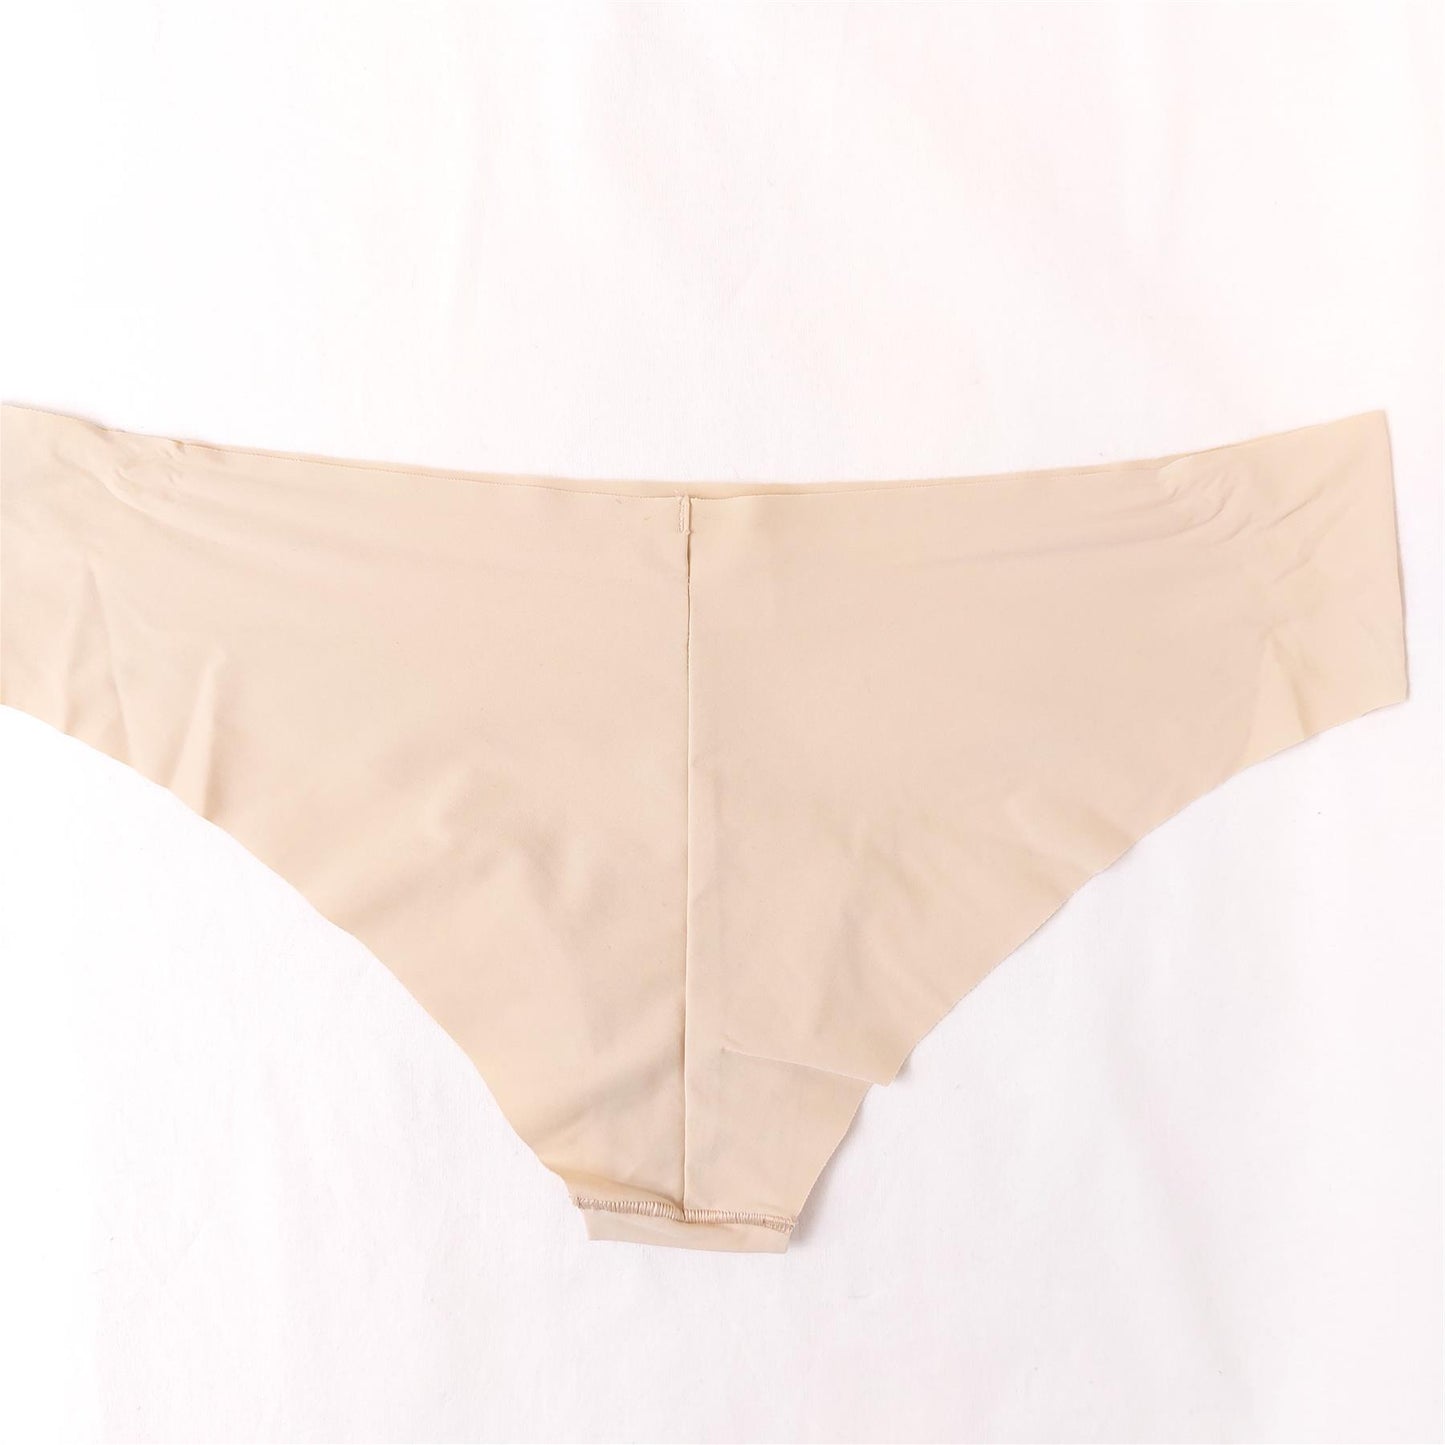 Women's Bikini Brief Knickers Laser Cut No VPL Cotton Lined Almond Size Large 3 Pack